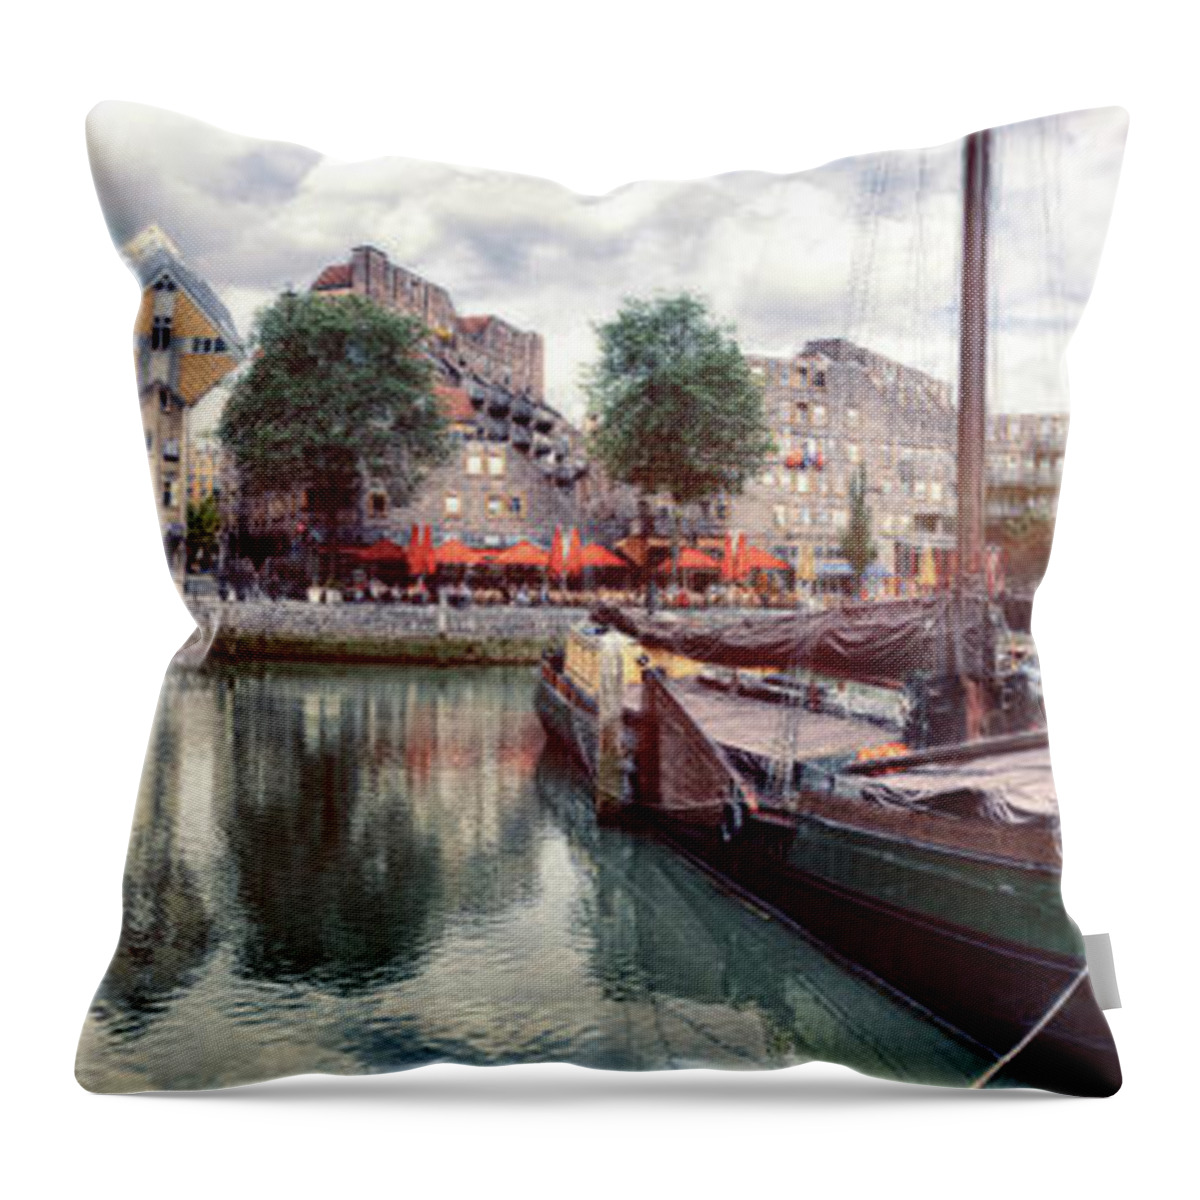 Rotterdam Throw Pillow featuring the photograph Rotterdam landscape by Ariadna De Raadt